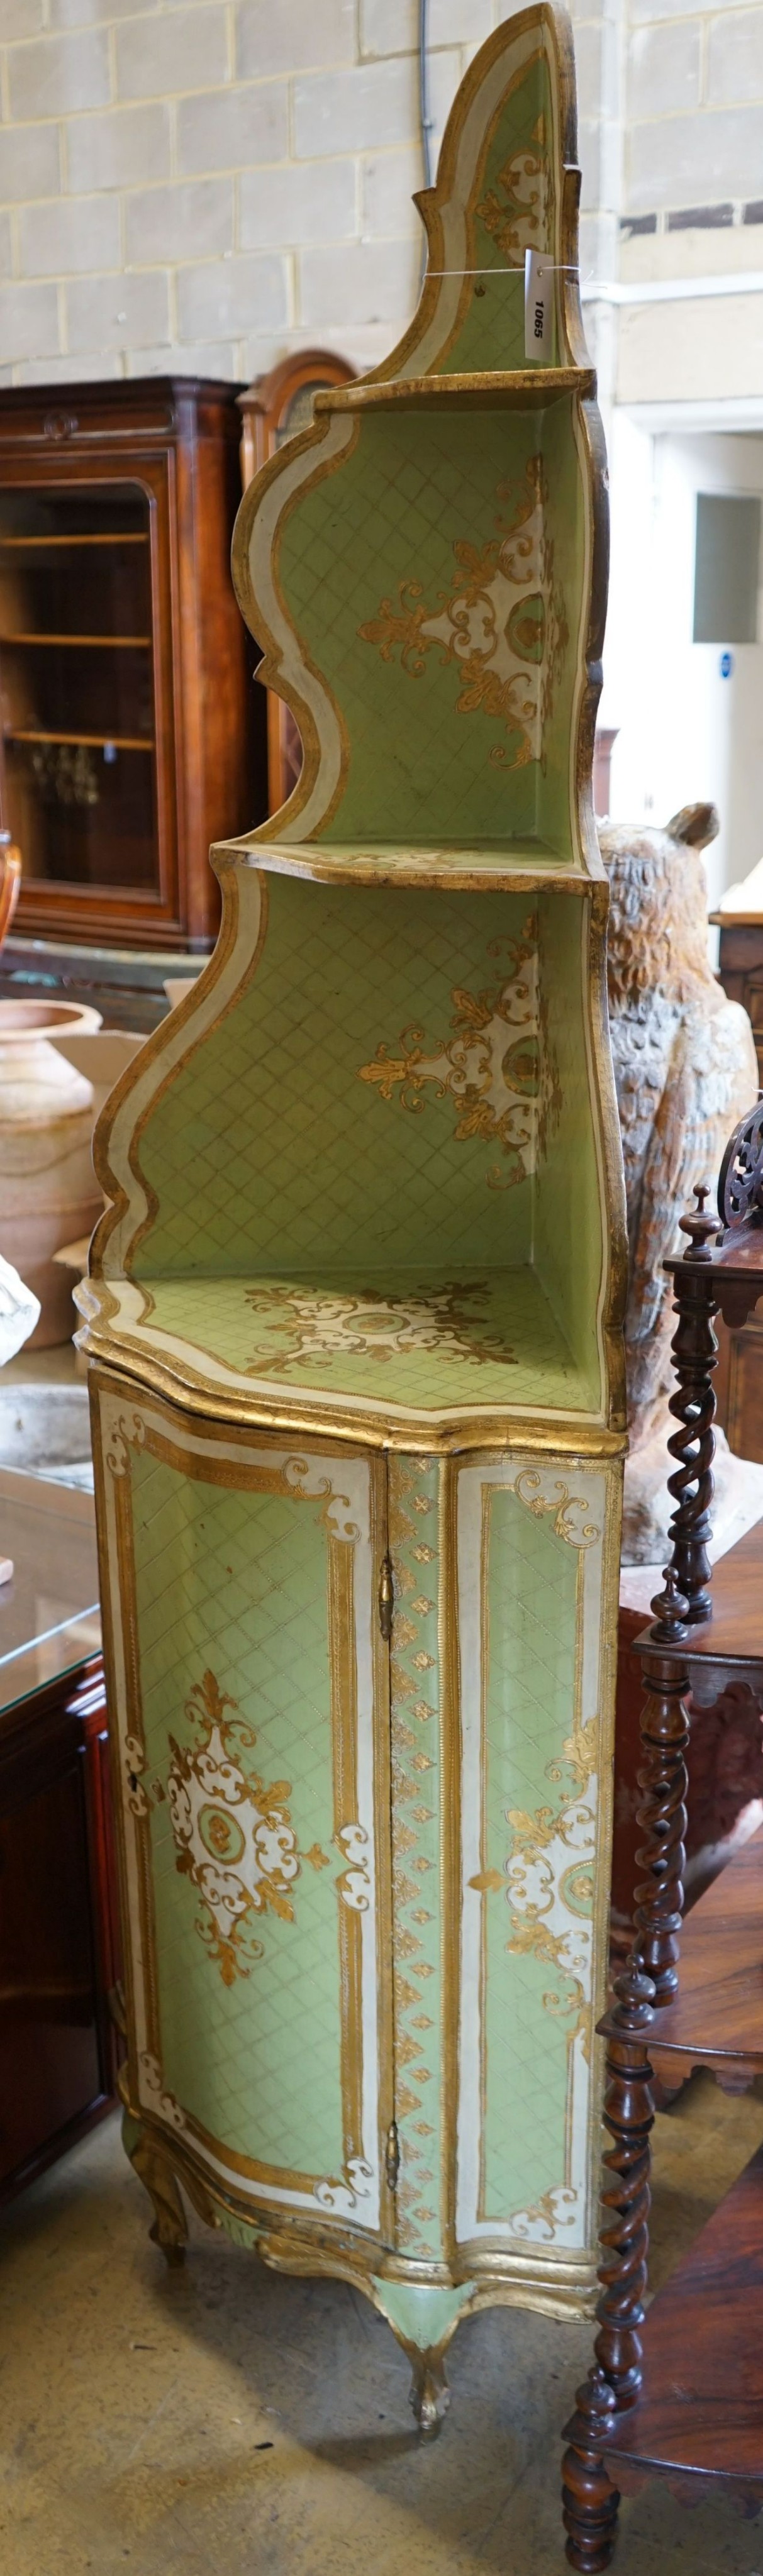 An Italian painted parcel gilt standing corner cabinet, width 57cm, depth 39cm, height 189cm